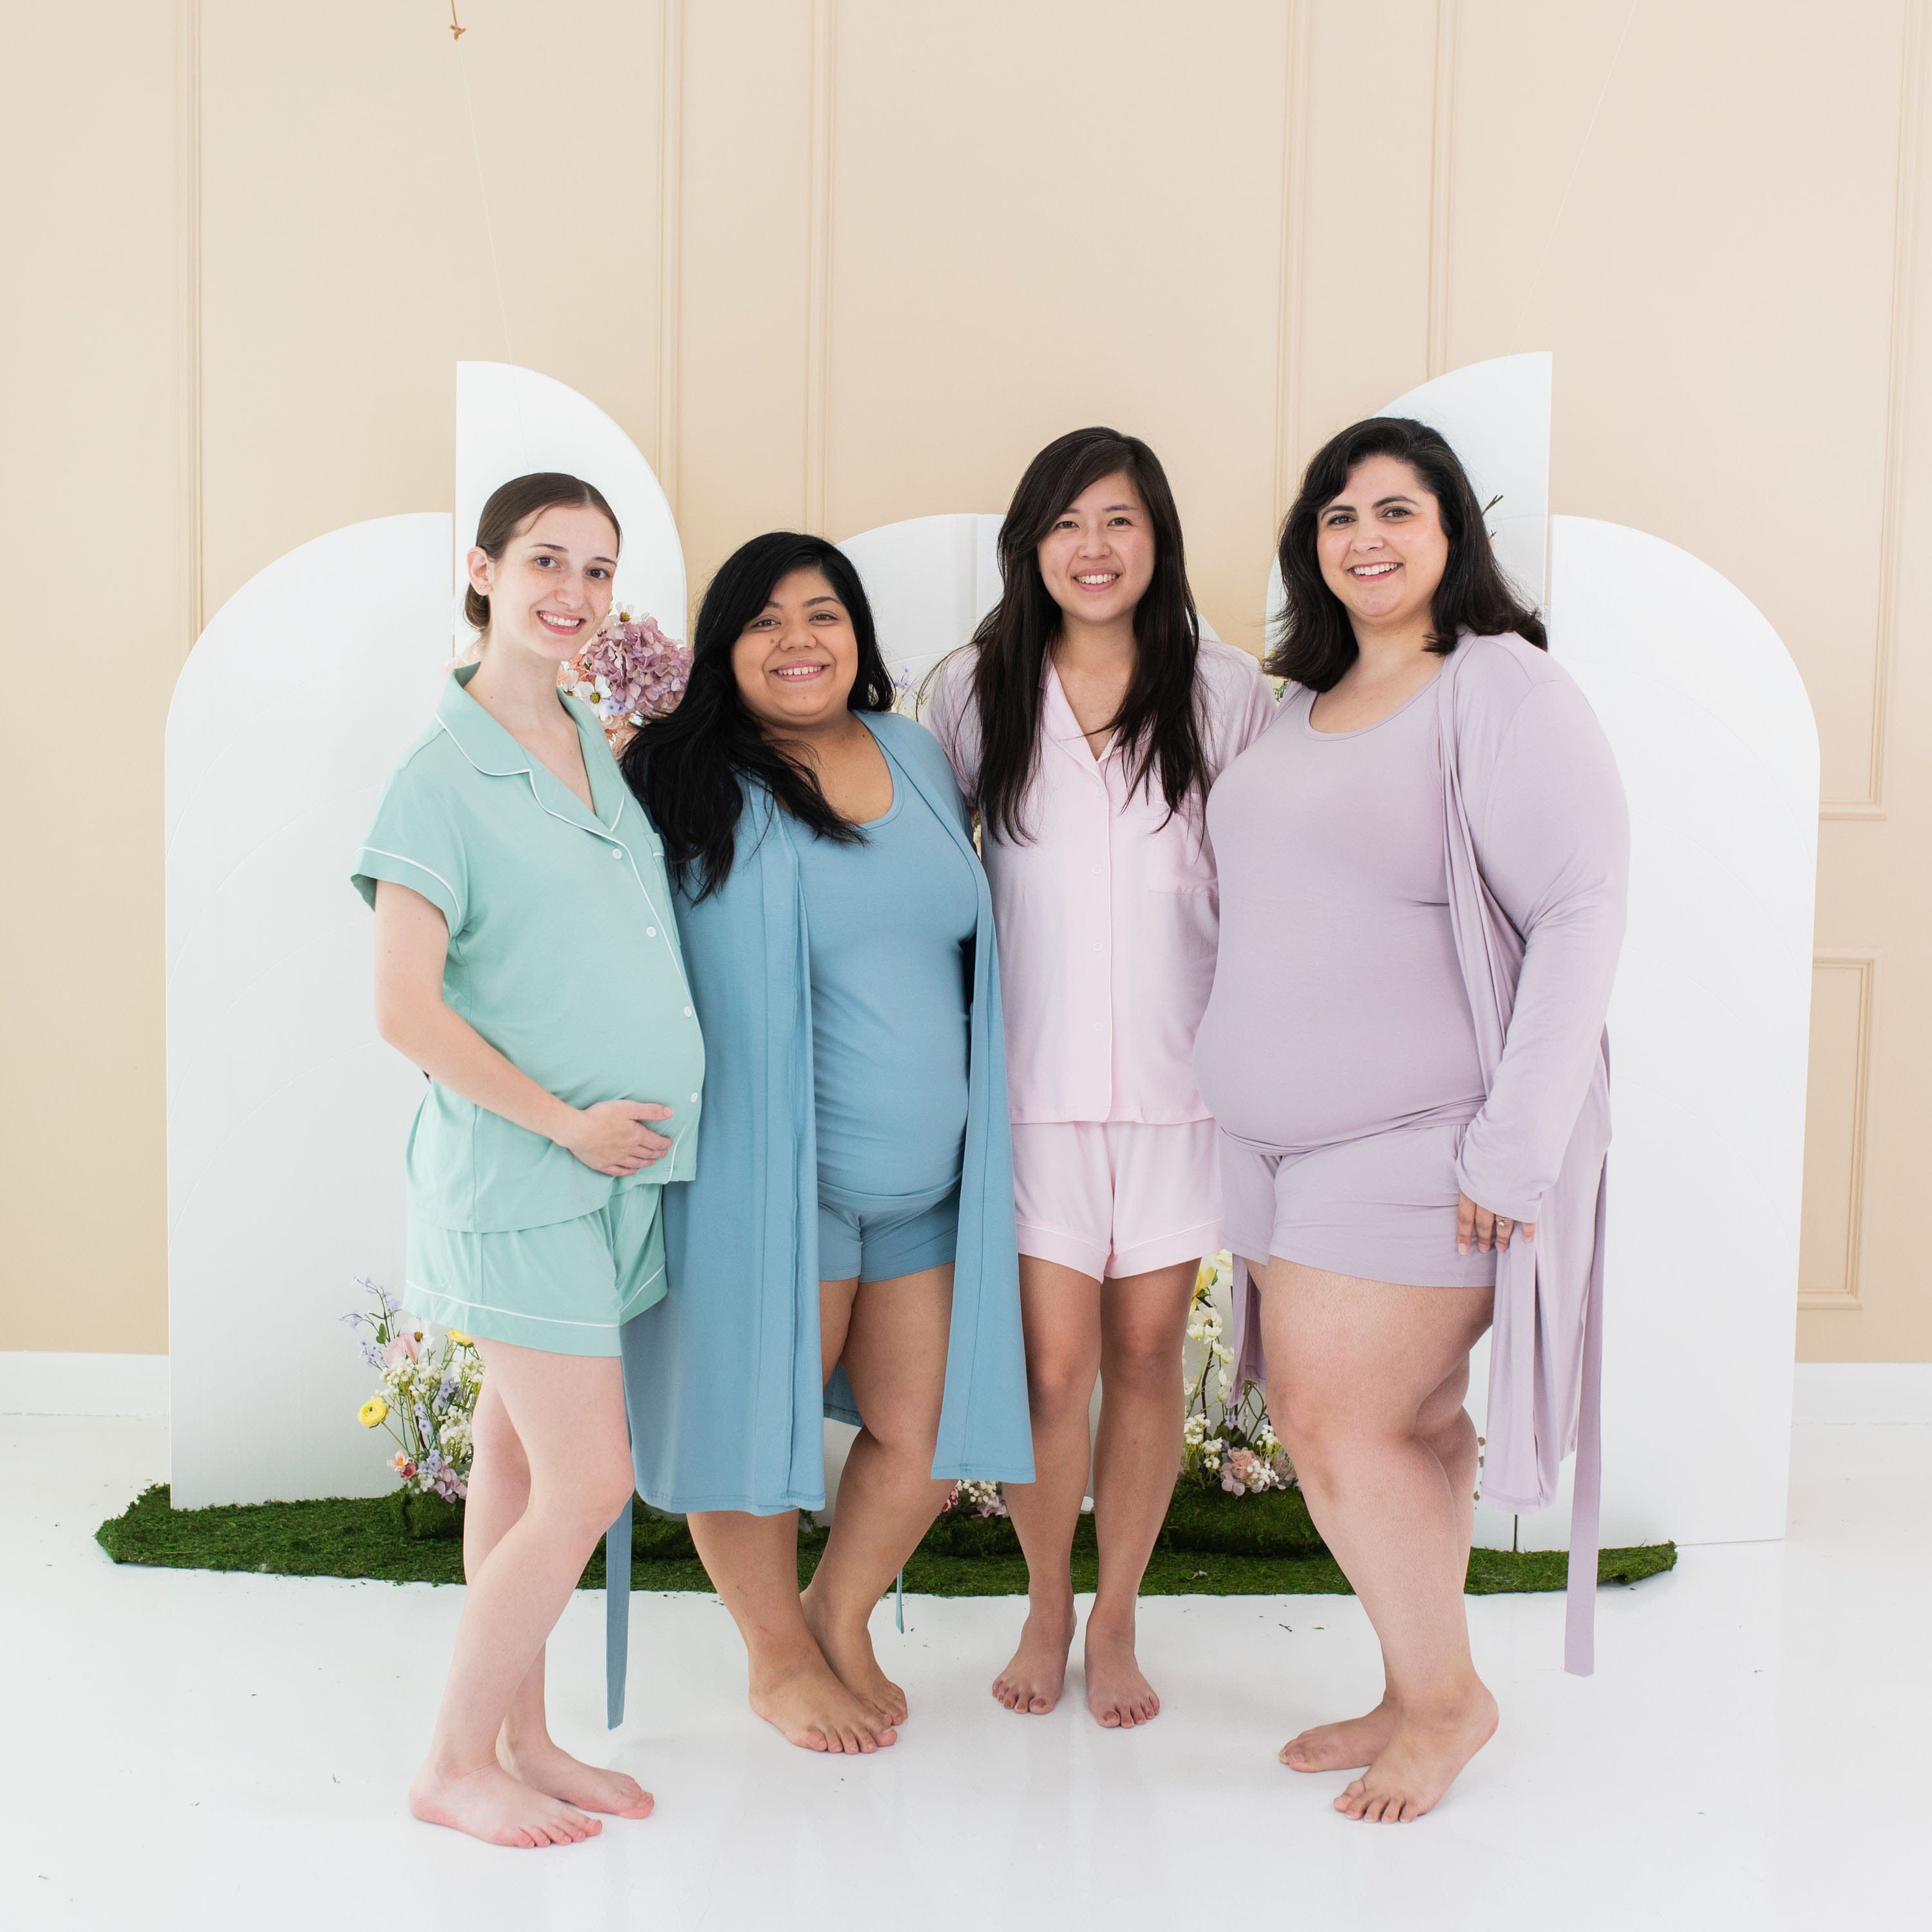 Kyte Baby Women’s Short Sleeve Pajama Set Women’s Short Sleeve Pajama Set in Wasabi with Cloud Trim